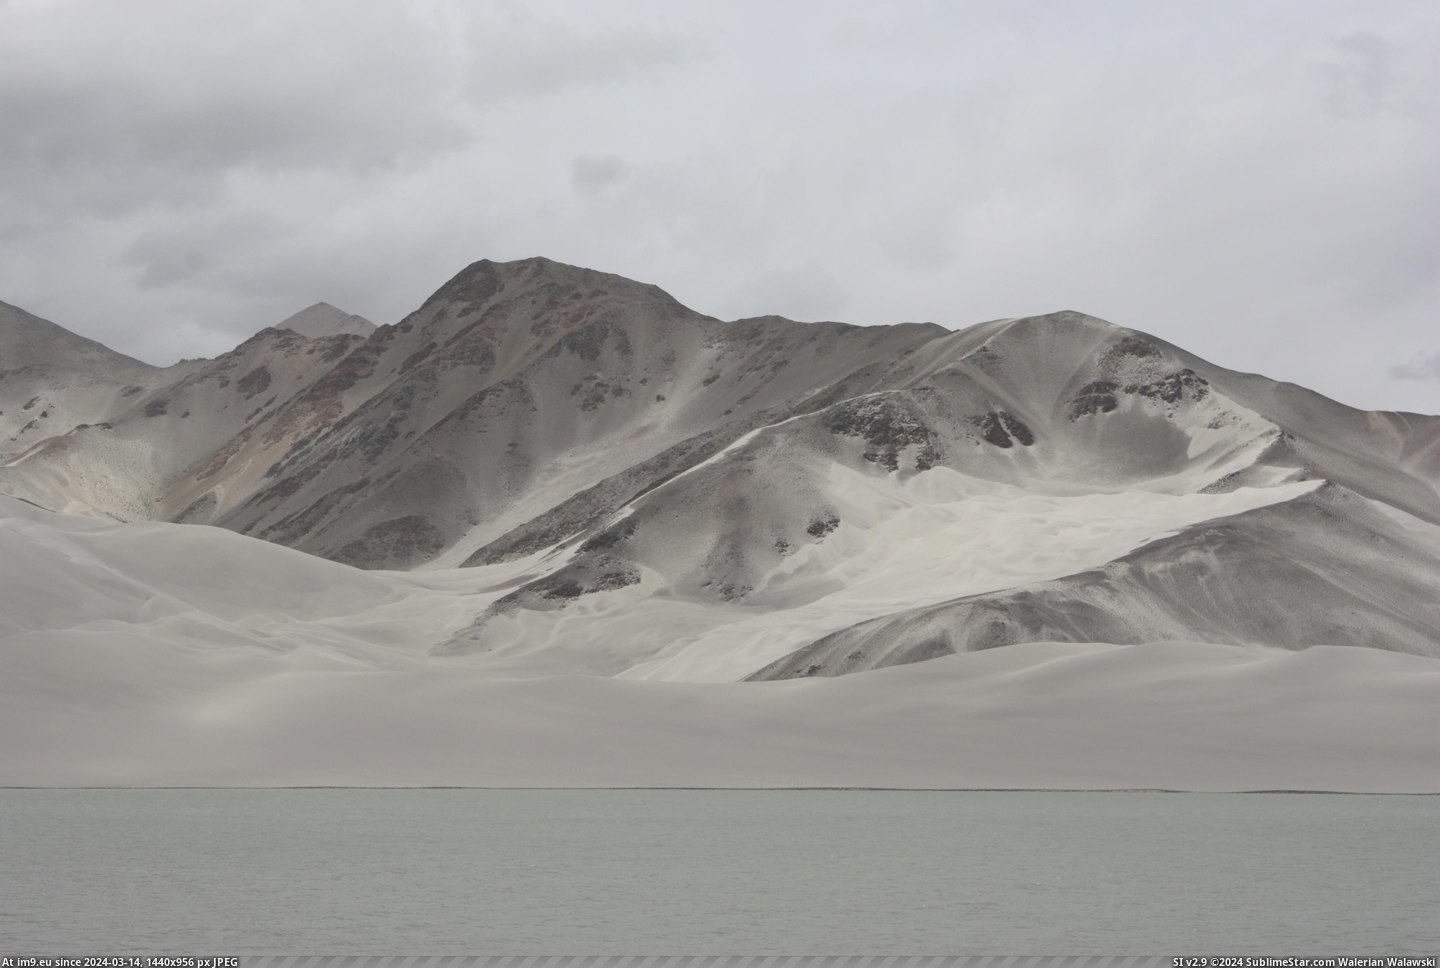 #White #Mountain #Province #4272x2848 #Xinjiang #China #Sand [Earthporn] [OC] White Sand mountain - Xinjiang Province, China [4272x2848] Pic. (Изображение из альбом My r/EARTHPORN favs))